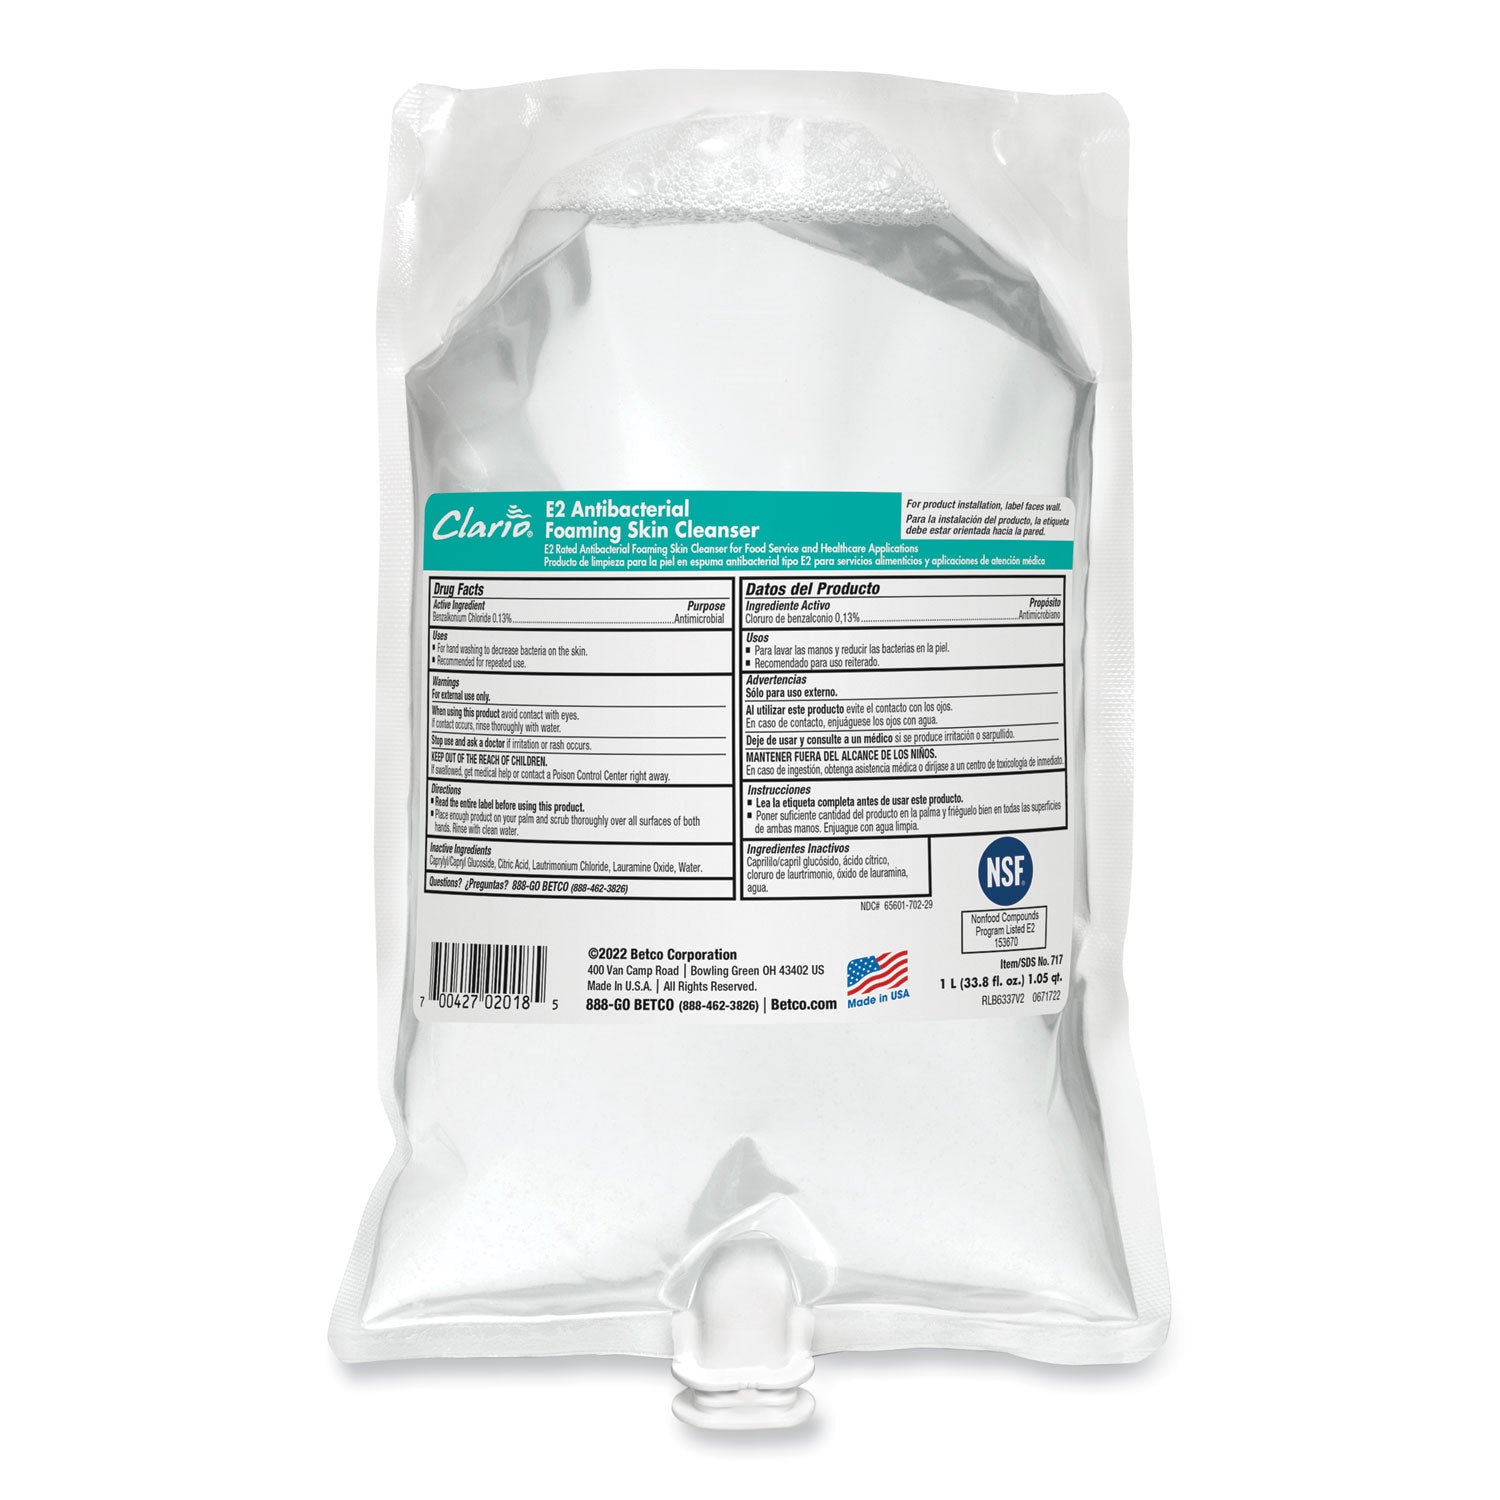 e2-antibacterial-foaming-skin-cleanser-fragrance-free-1000-ml-refill-bag-6-carton_bet7172900 - 1